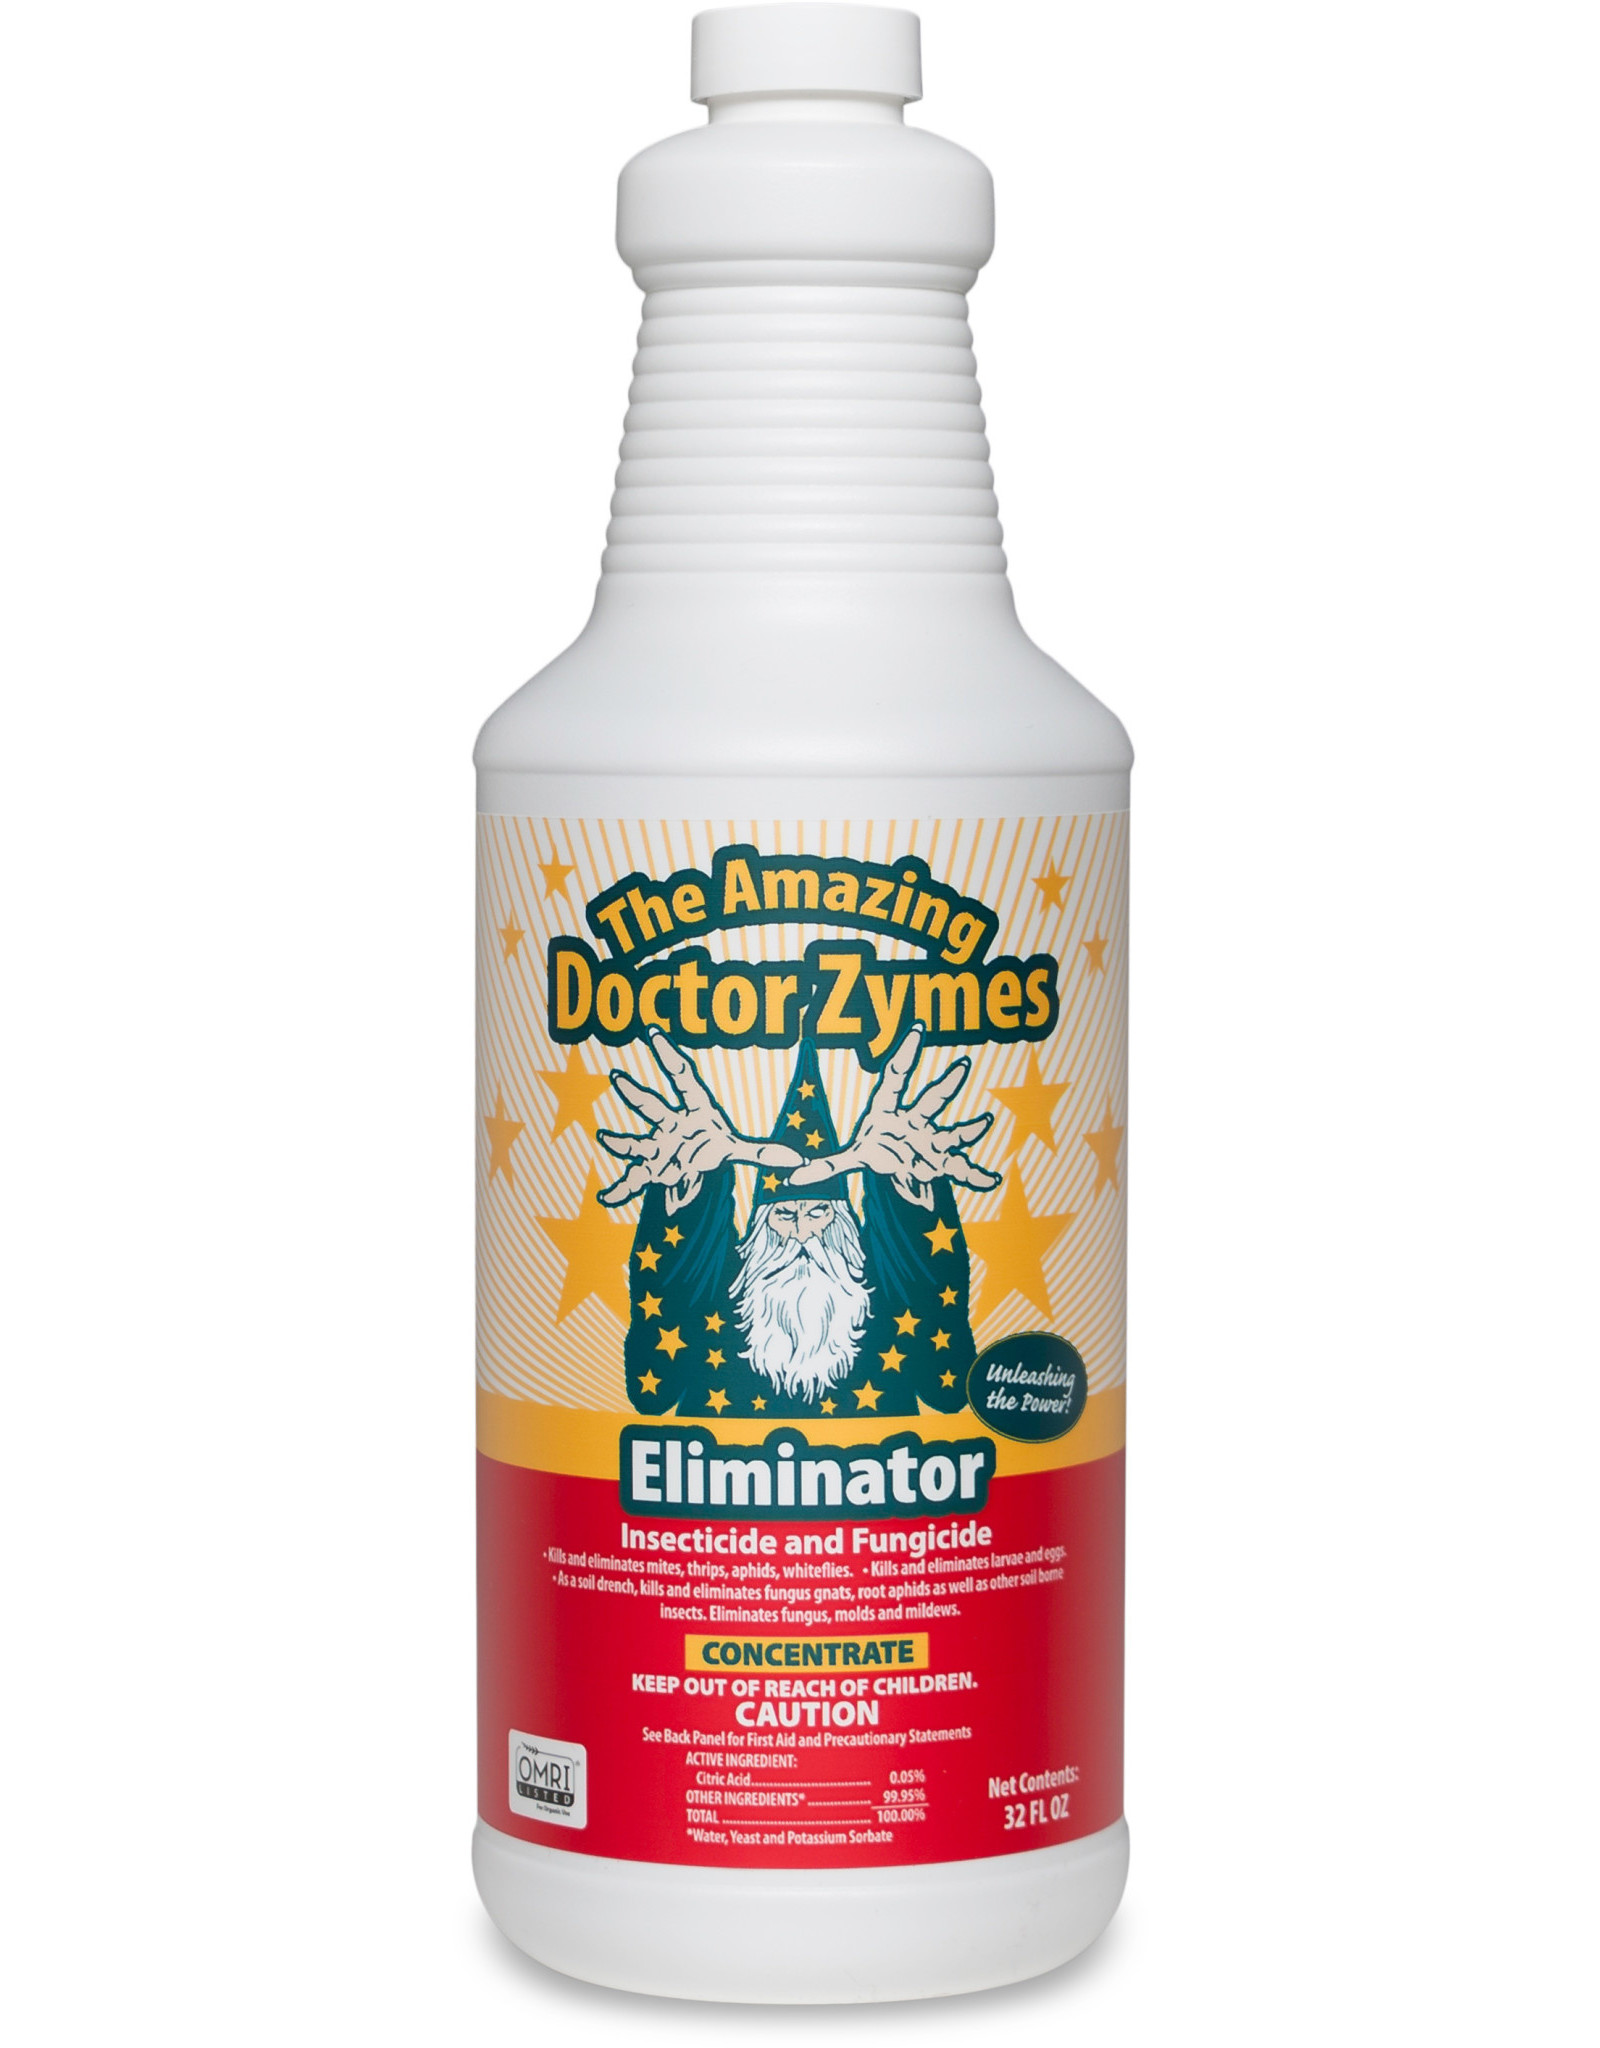 The Amazing Doctor Zymes The Amazing Doctor Zymes Eliminator Concentrate, 32 oz